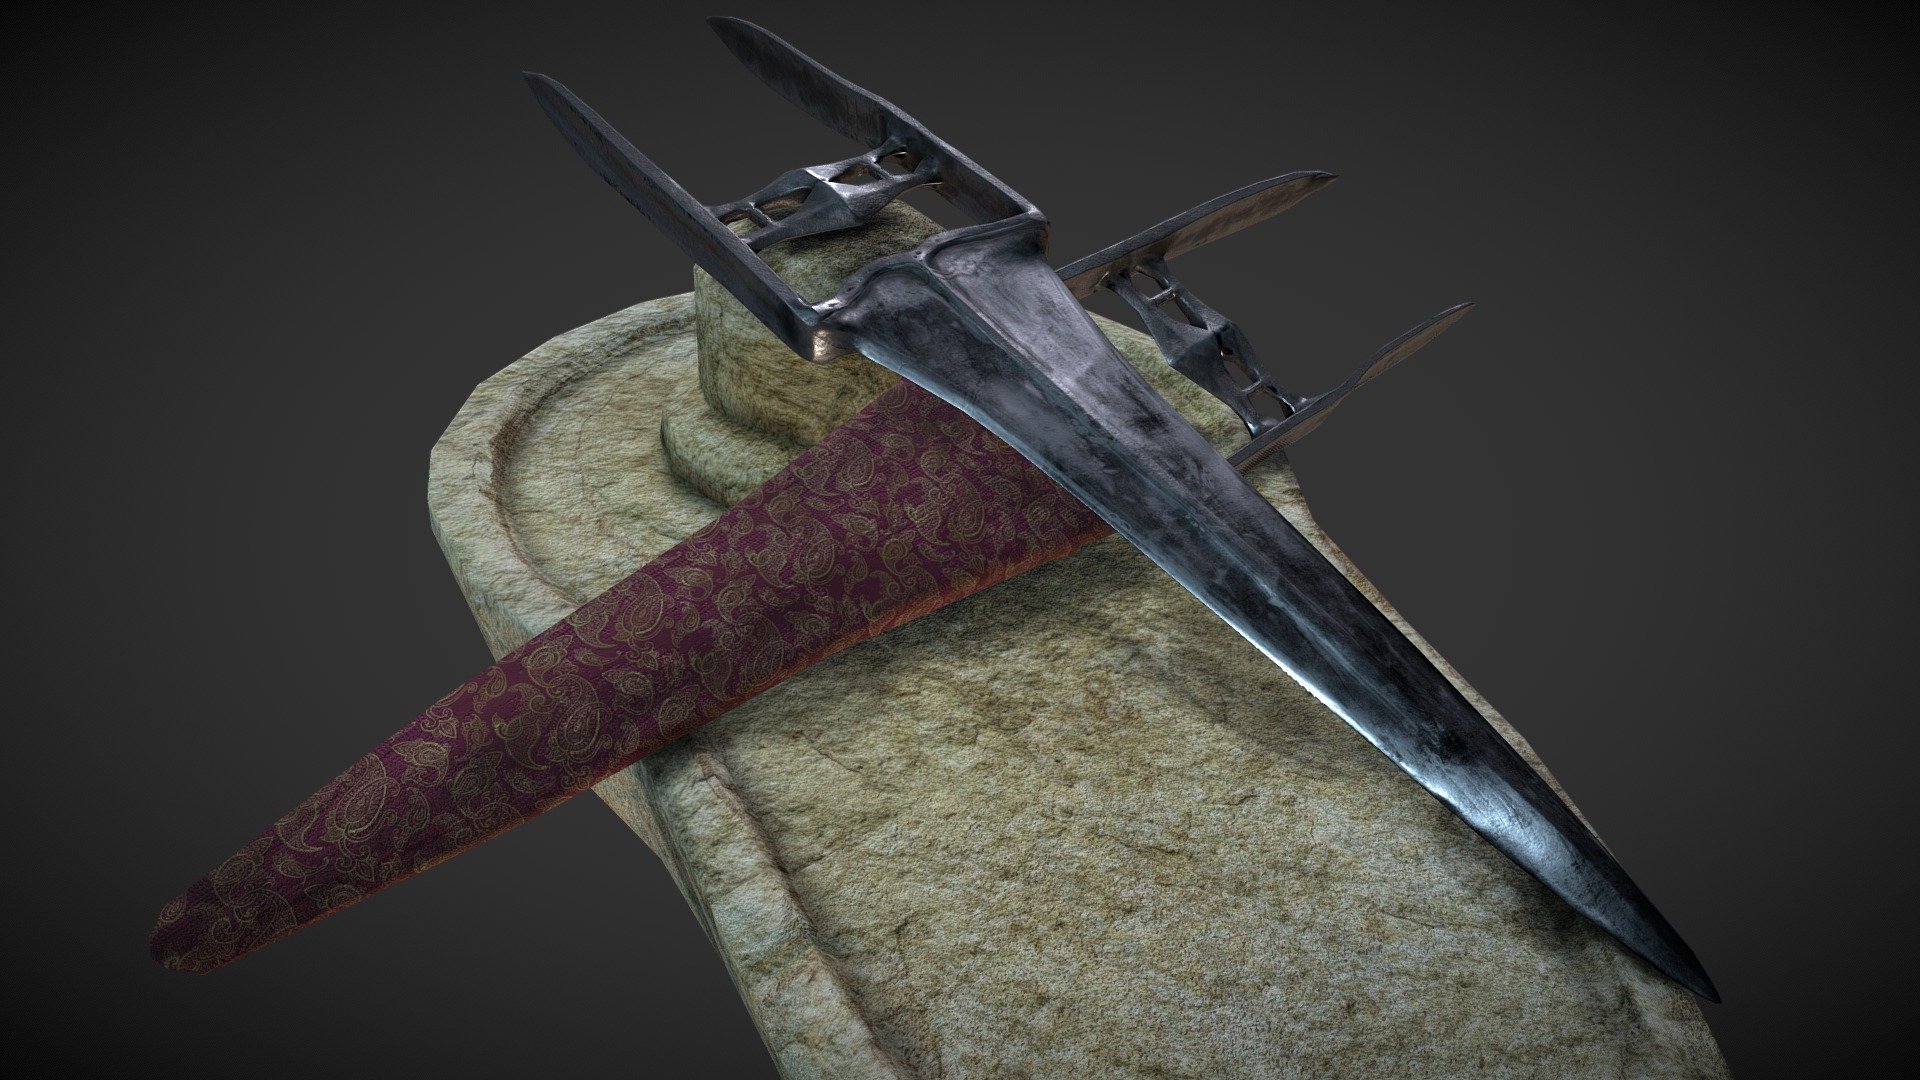 group of low poly assets arranged in simple scene - Katar dagger - 3D model by pawel wardecki (@waderian) 3d model